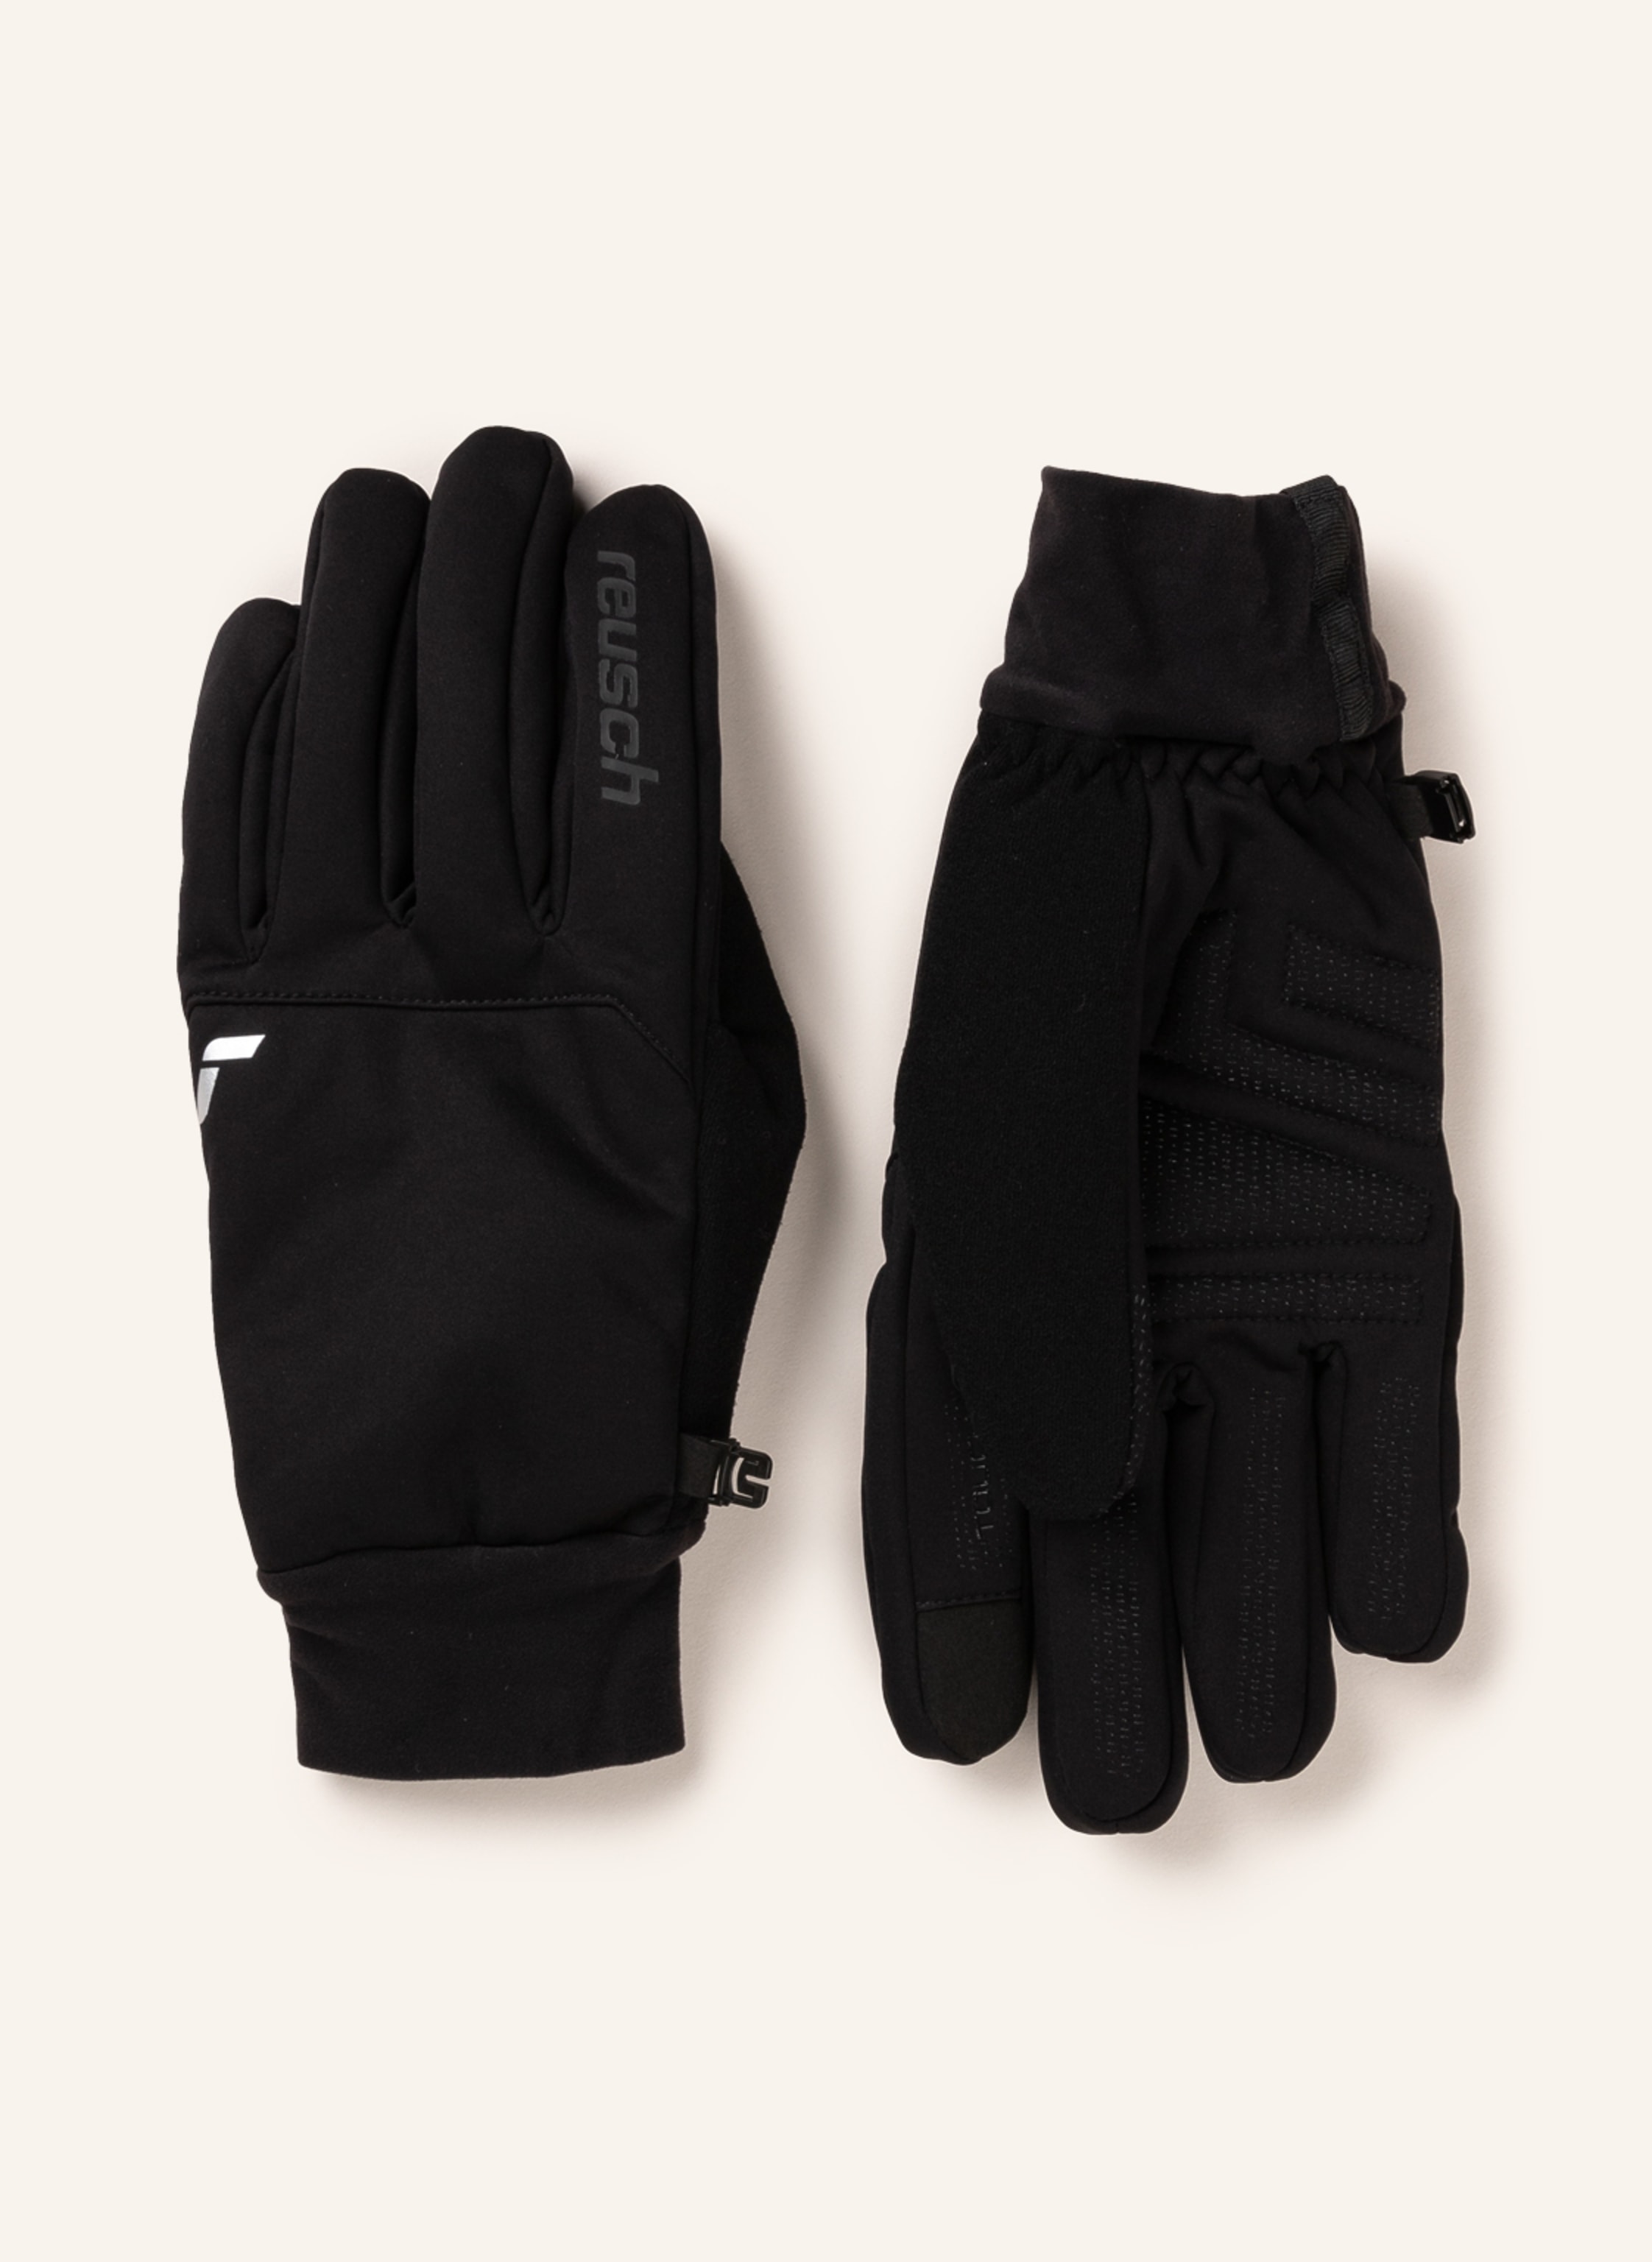 black Ski BACKCOUNTRY TOUCH-TEC in gloves reusch